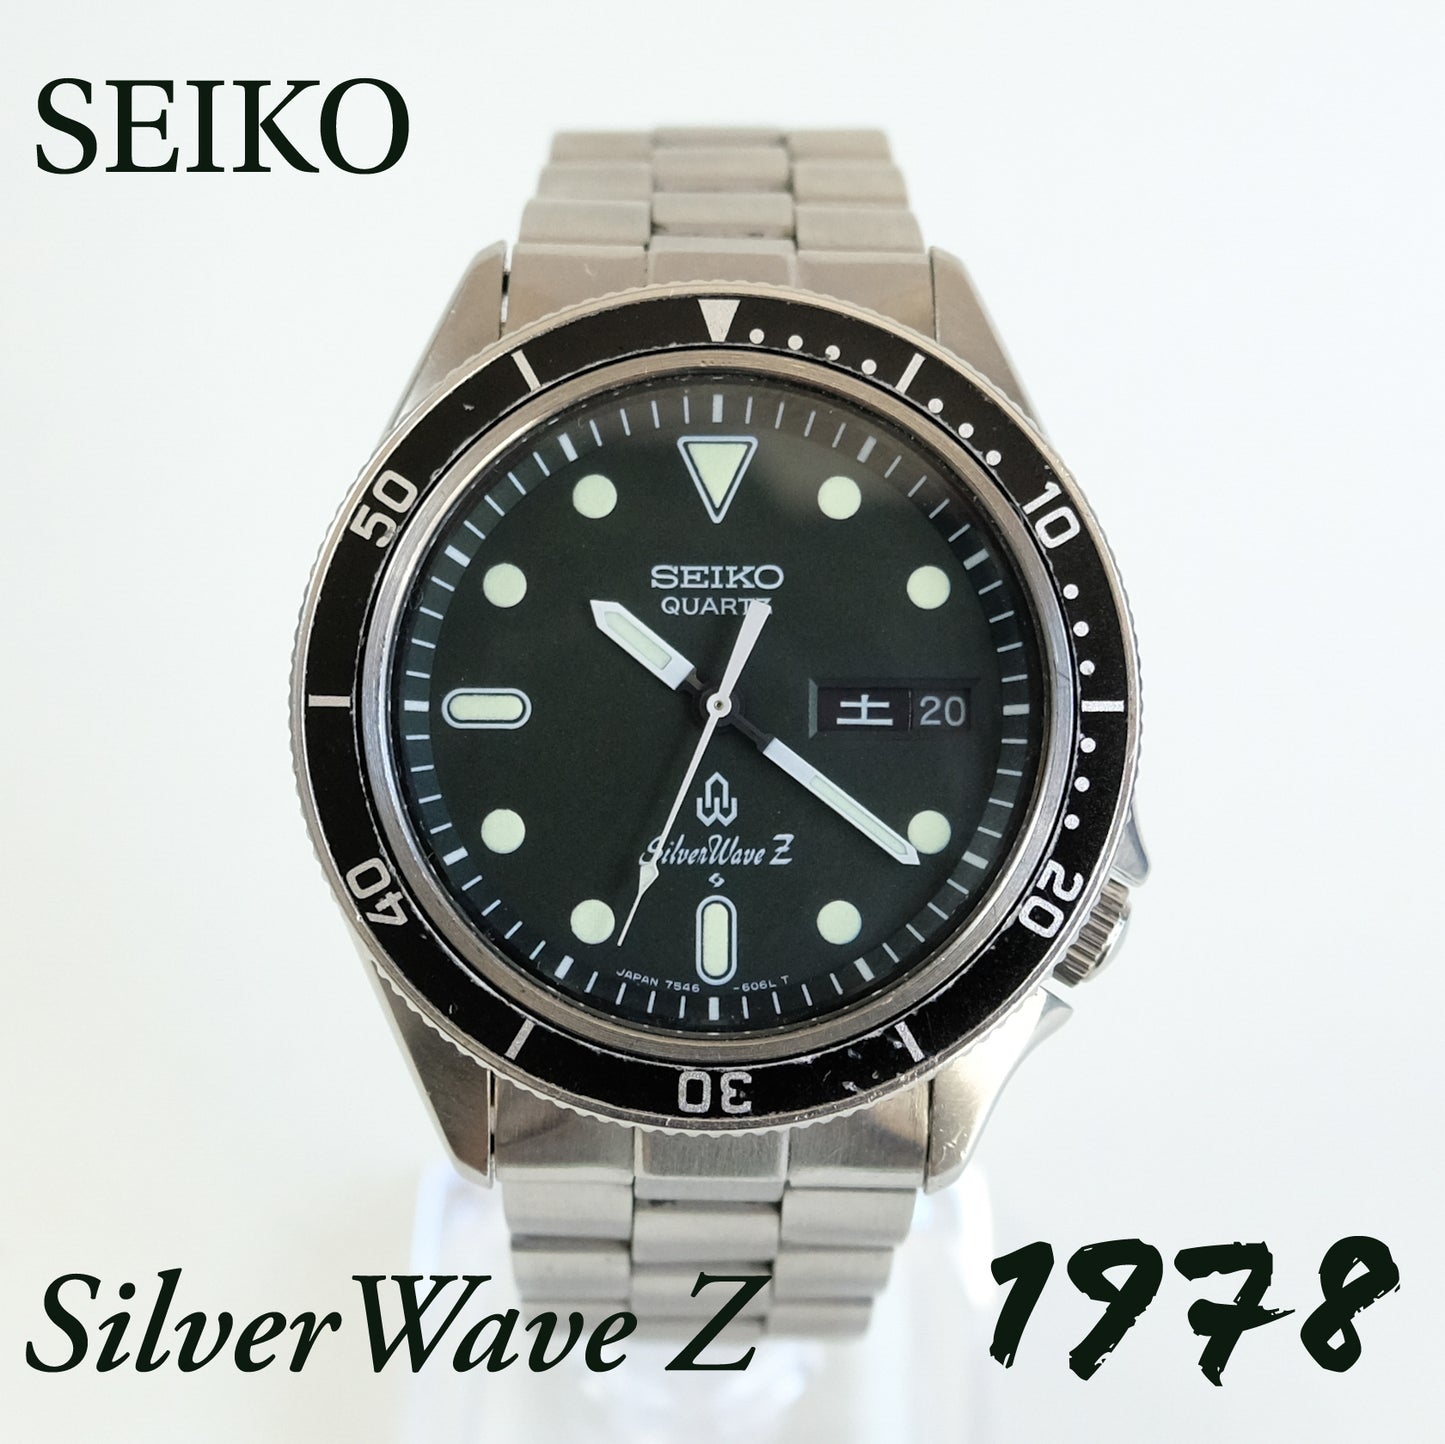 1978 Seiko SilverWave Z 7546-6060